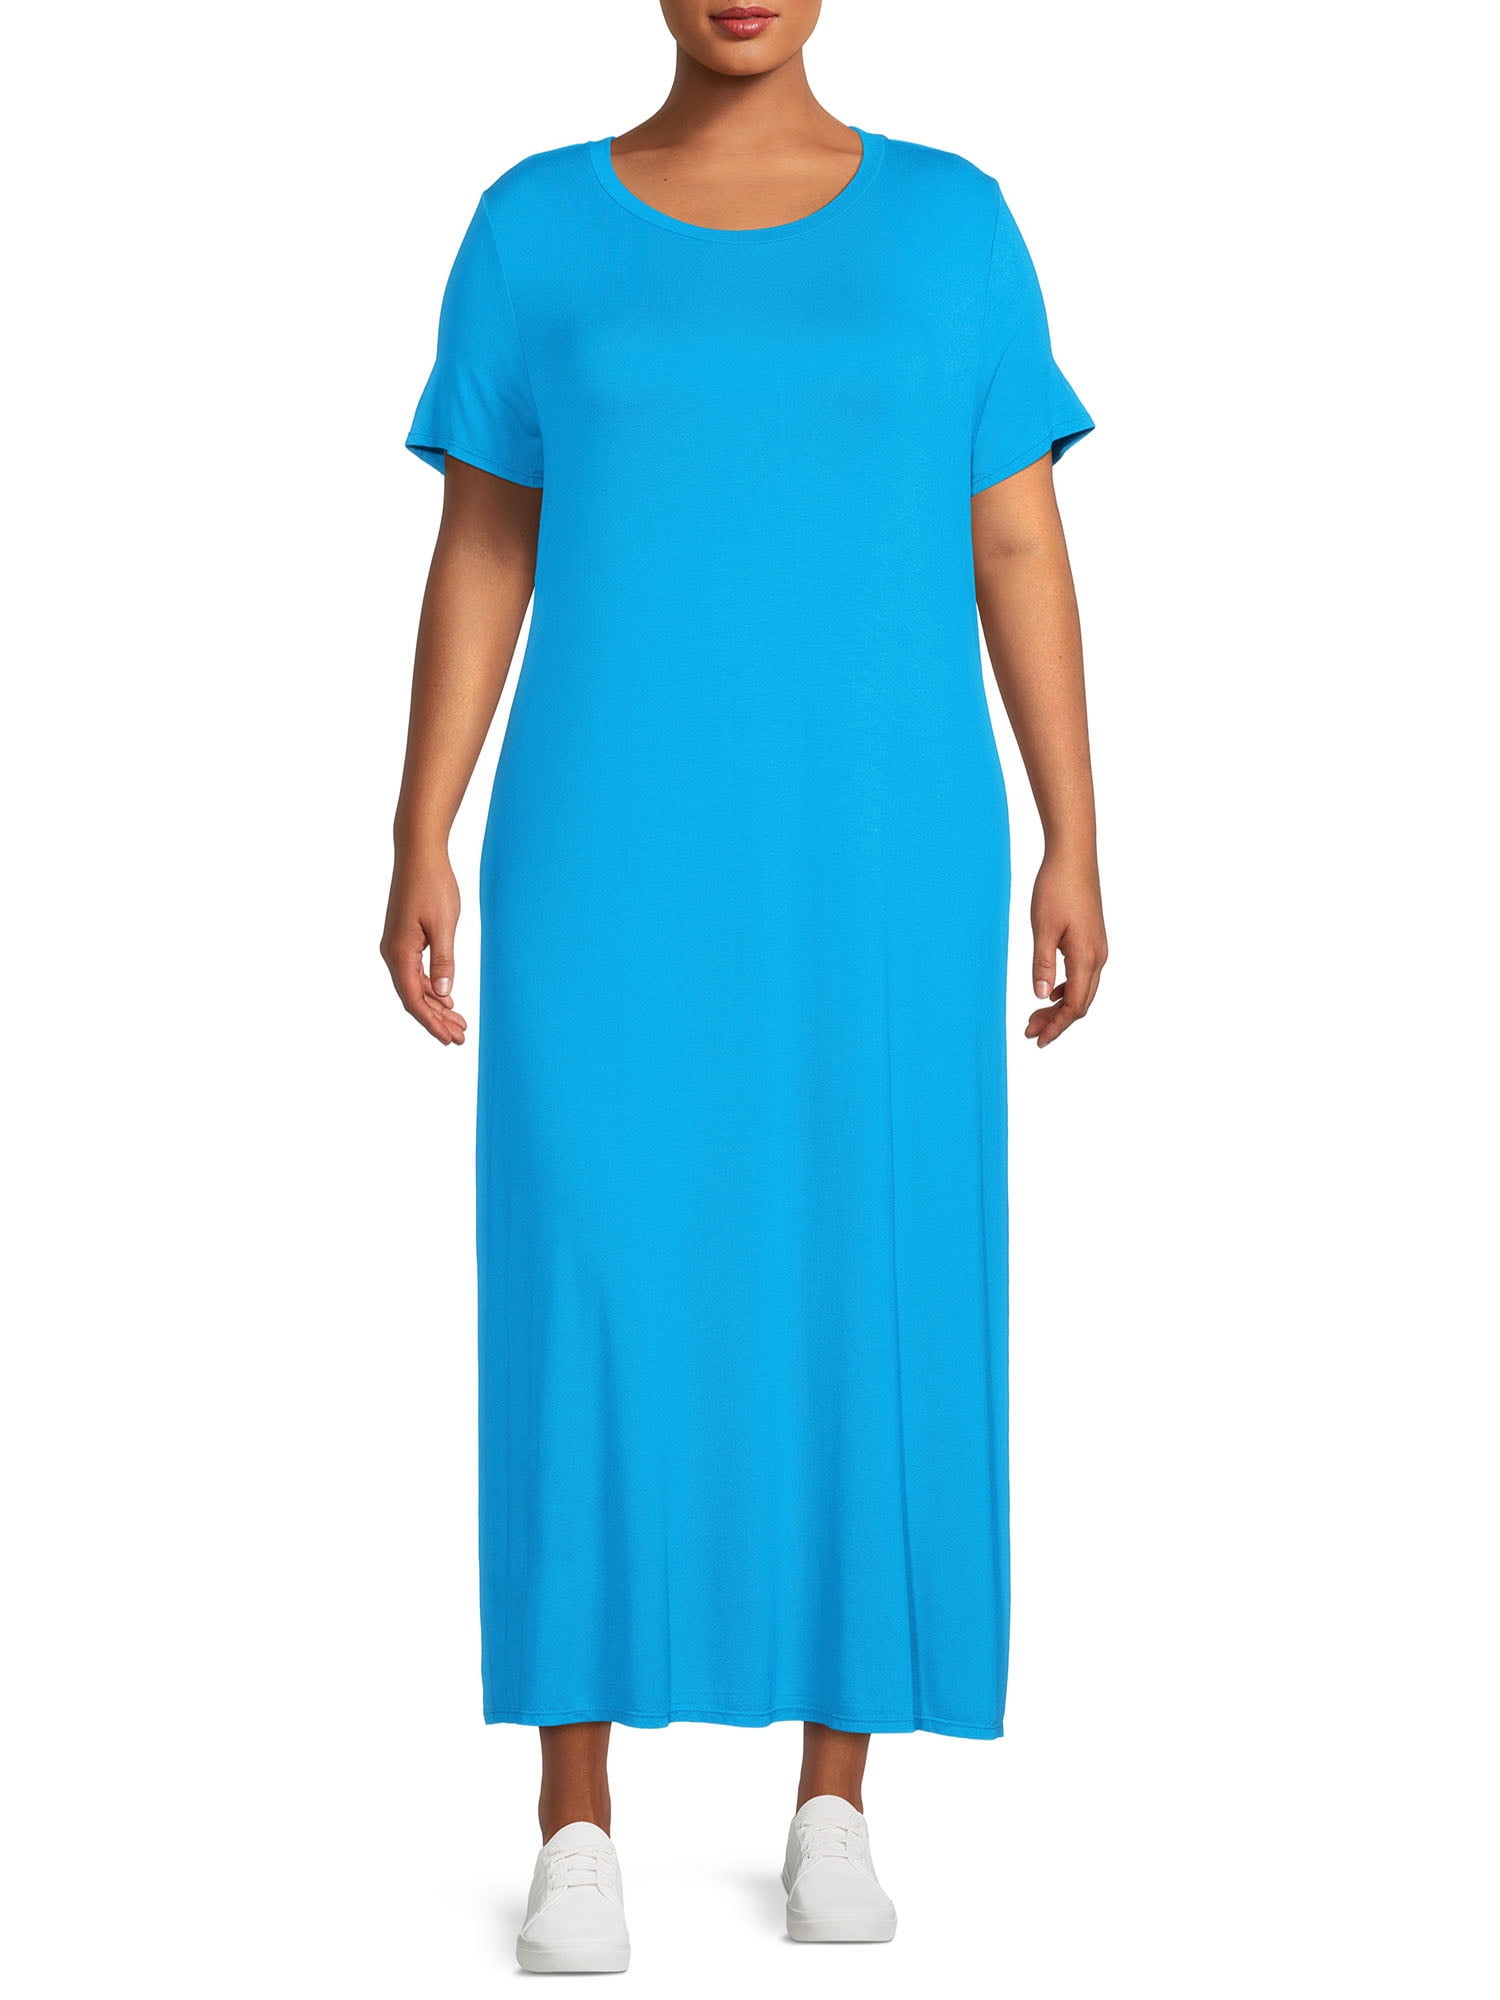 New Womens Plus Size Plain Long Jersey Scoop Neck Maxi Dress S-1X